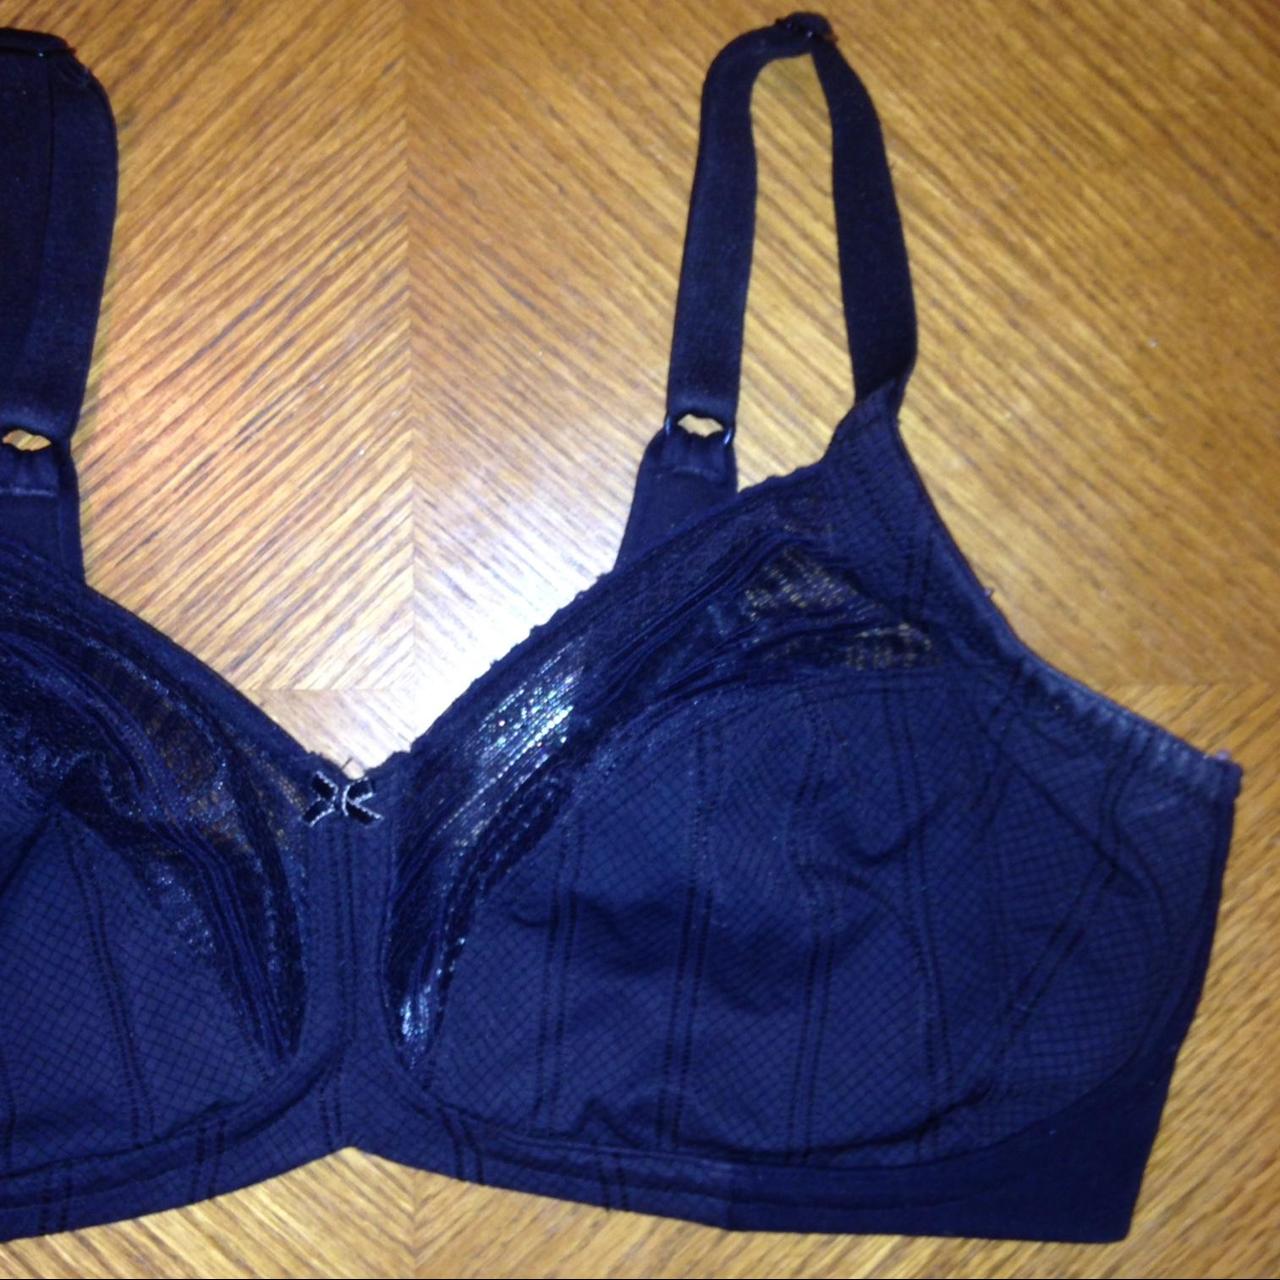 Product Image 2 - #lilyette black bra
size 36dd
no padding